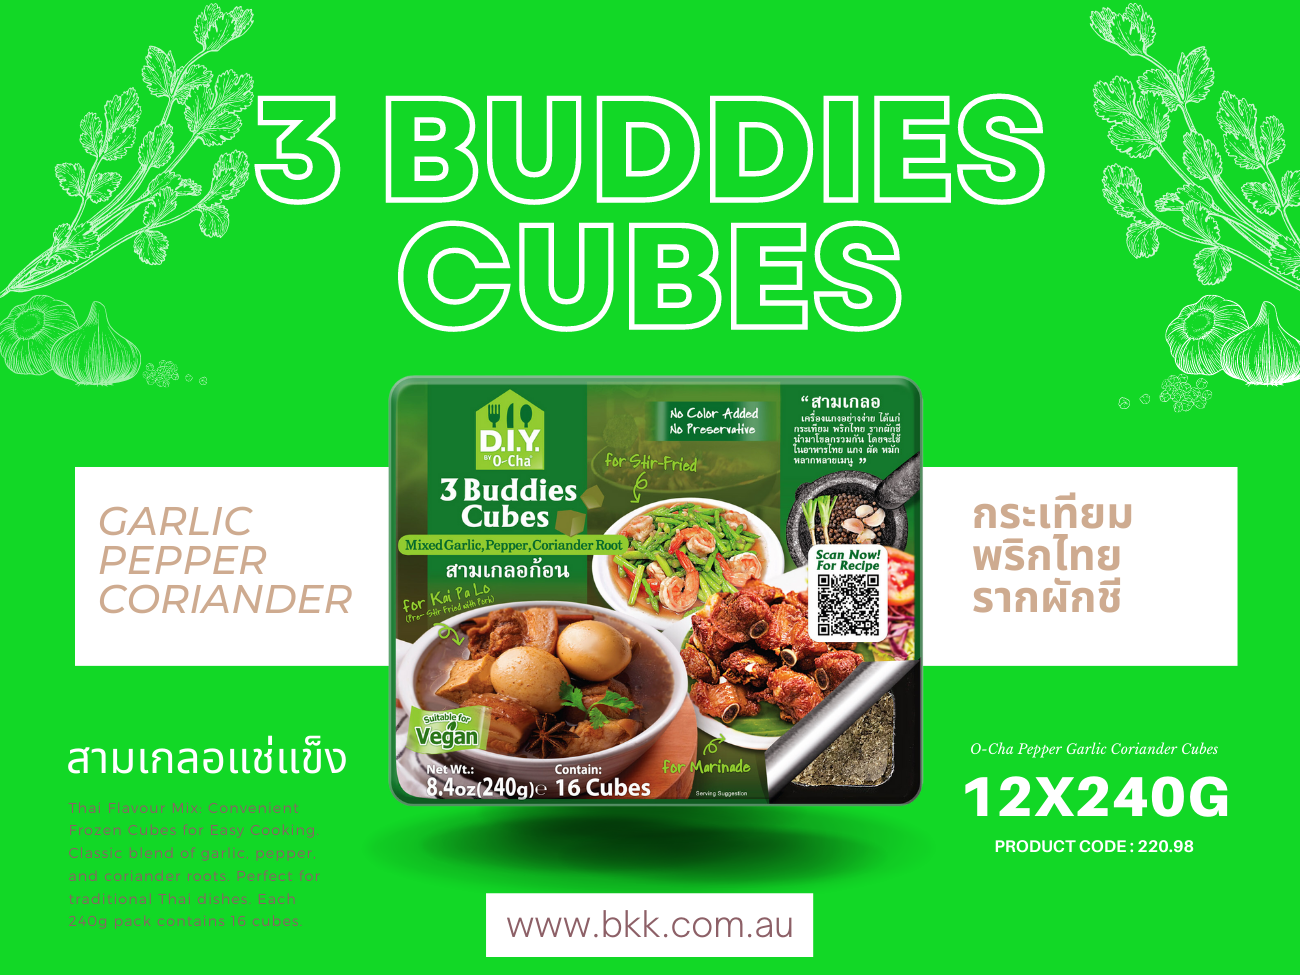 image presents Ocha product - 3 Buddies Cubes